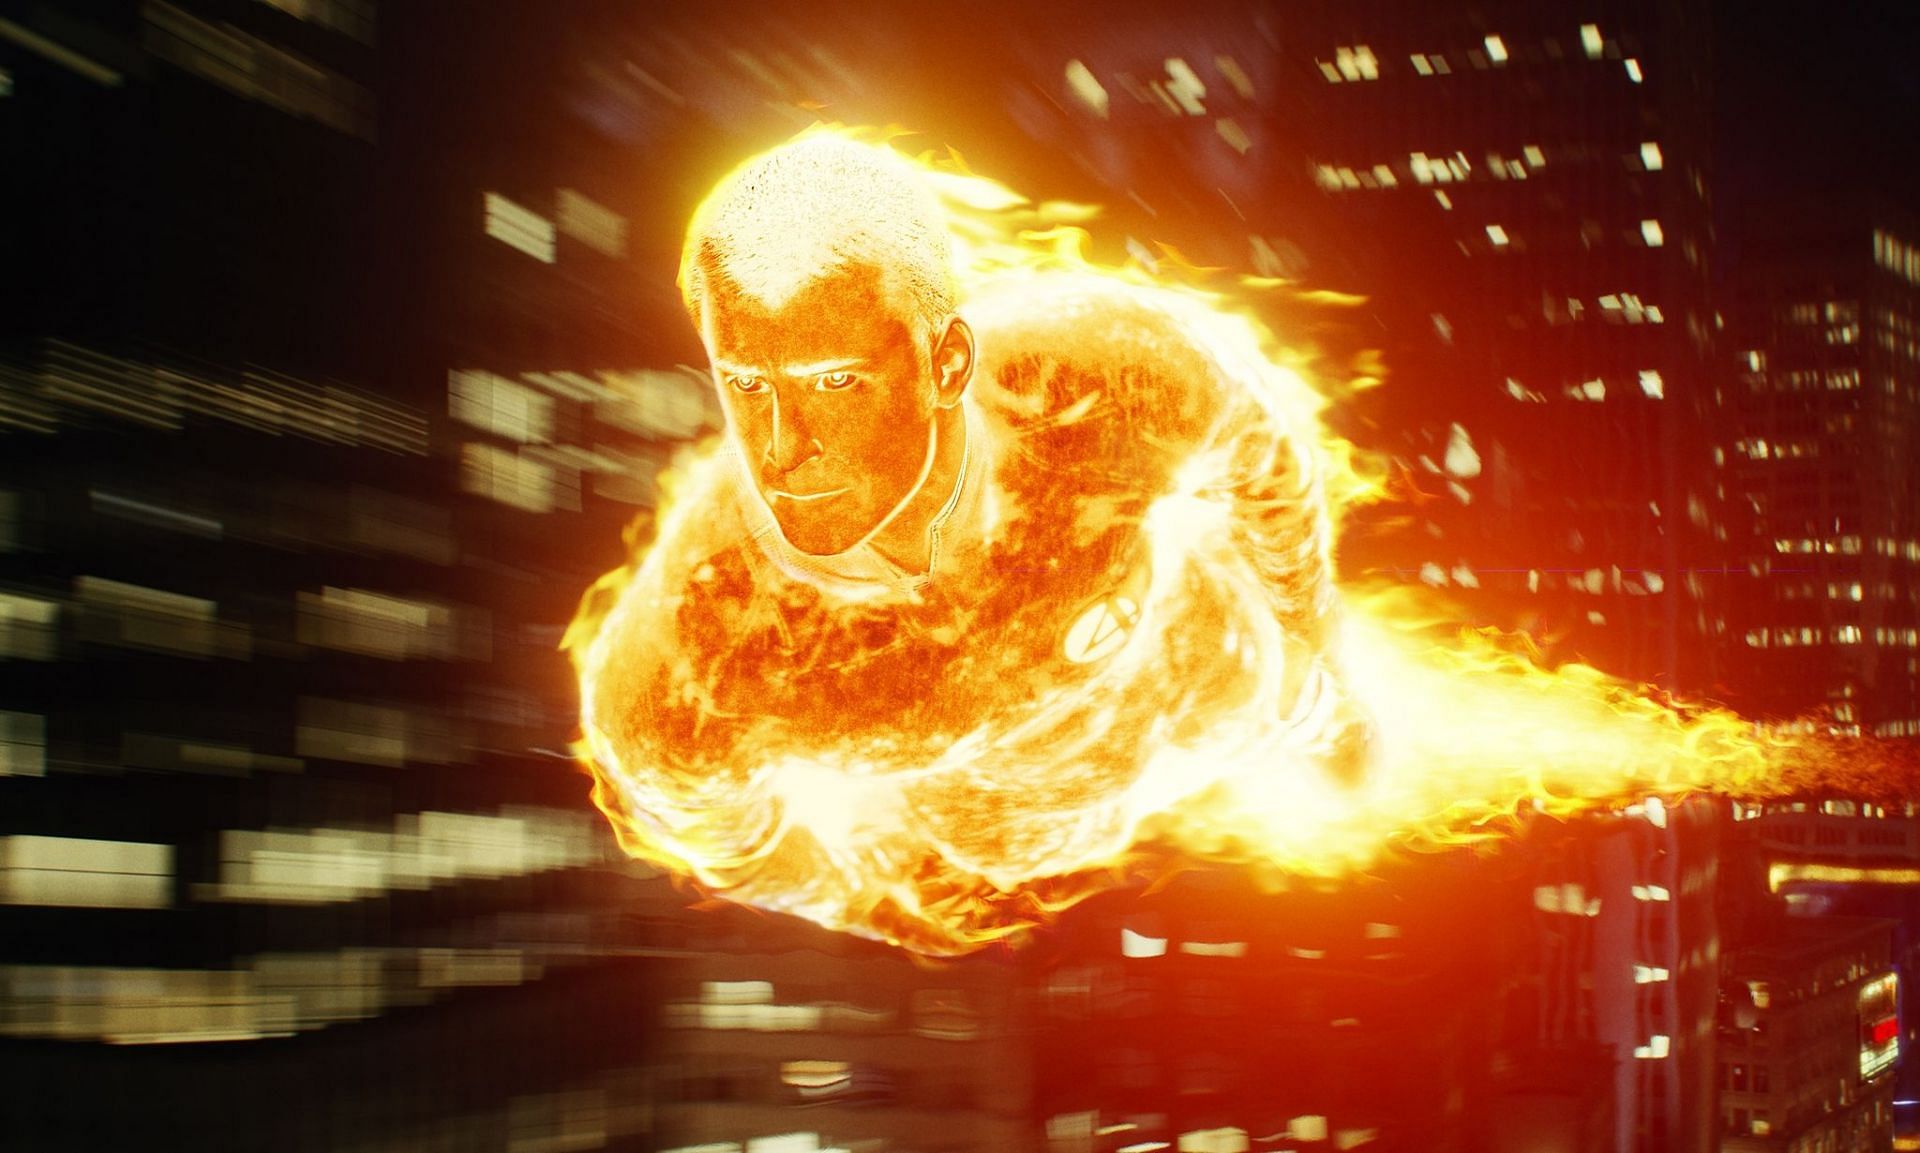 A still from Fantastic Four (image via 20th Century Fox)